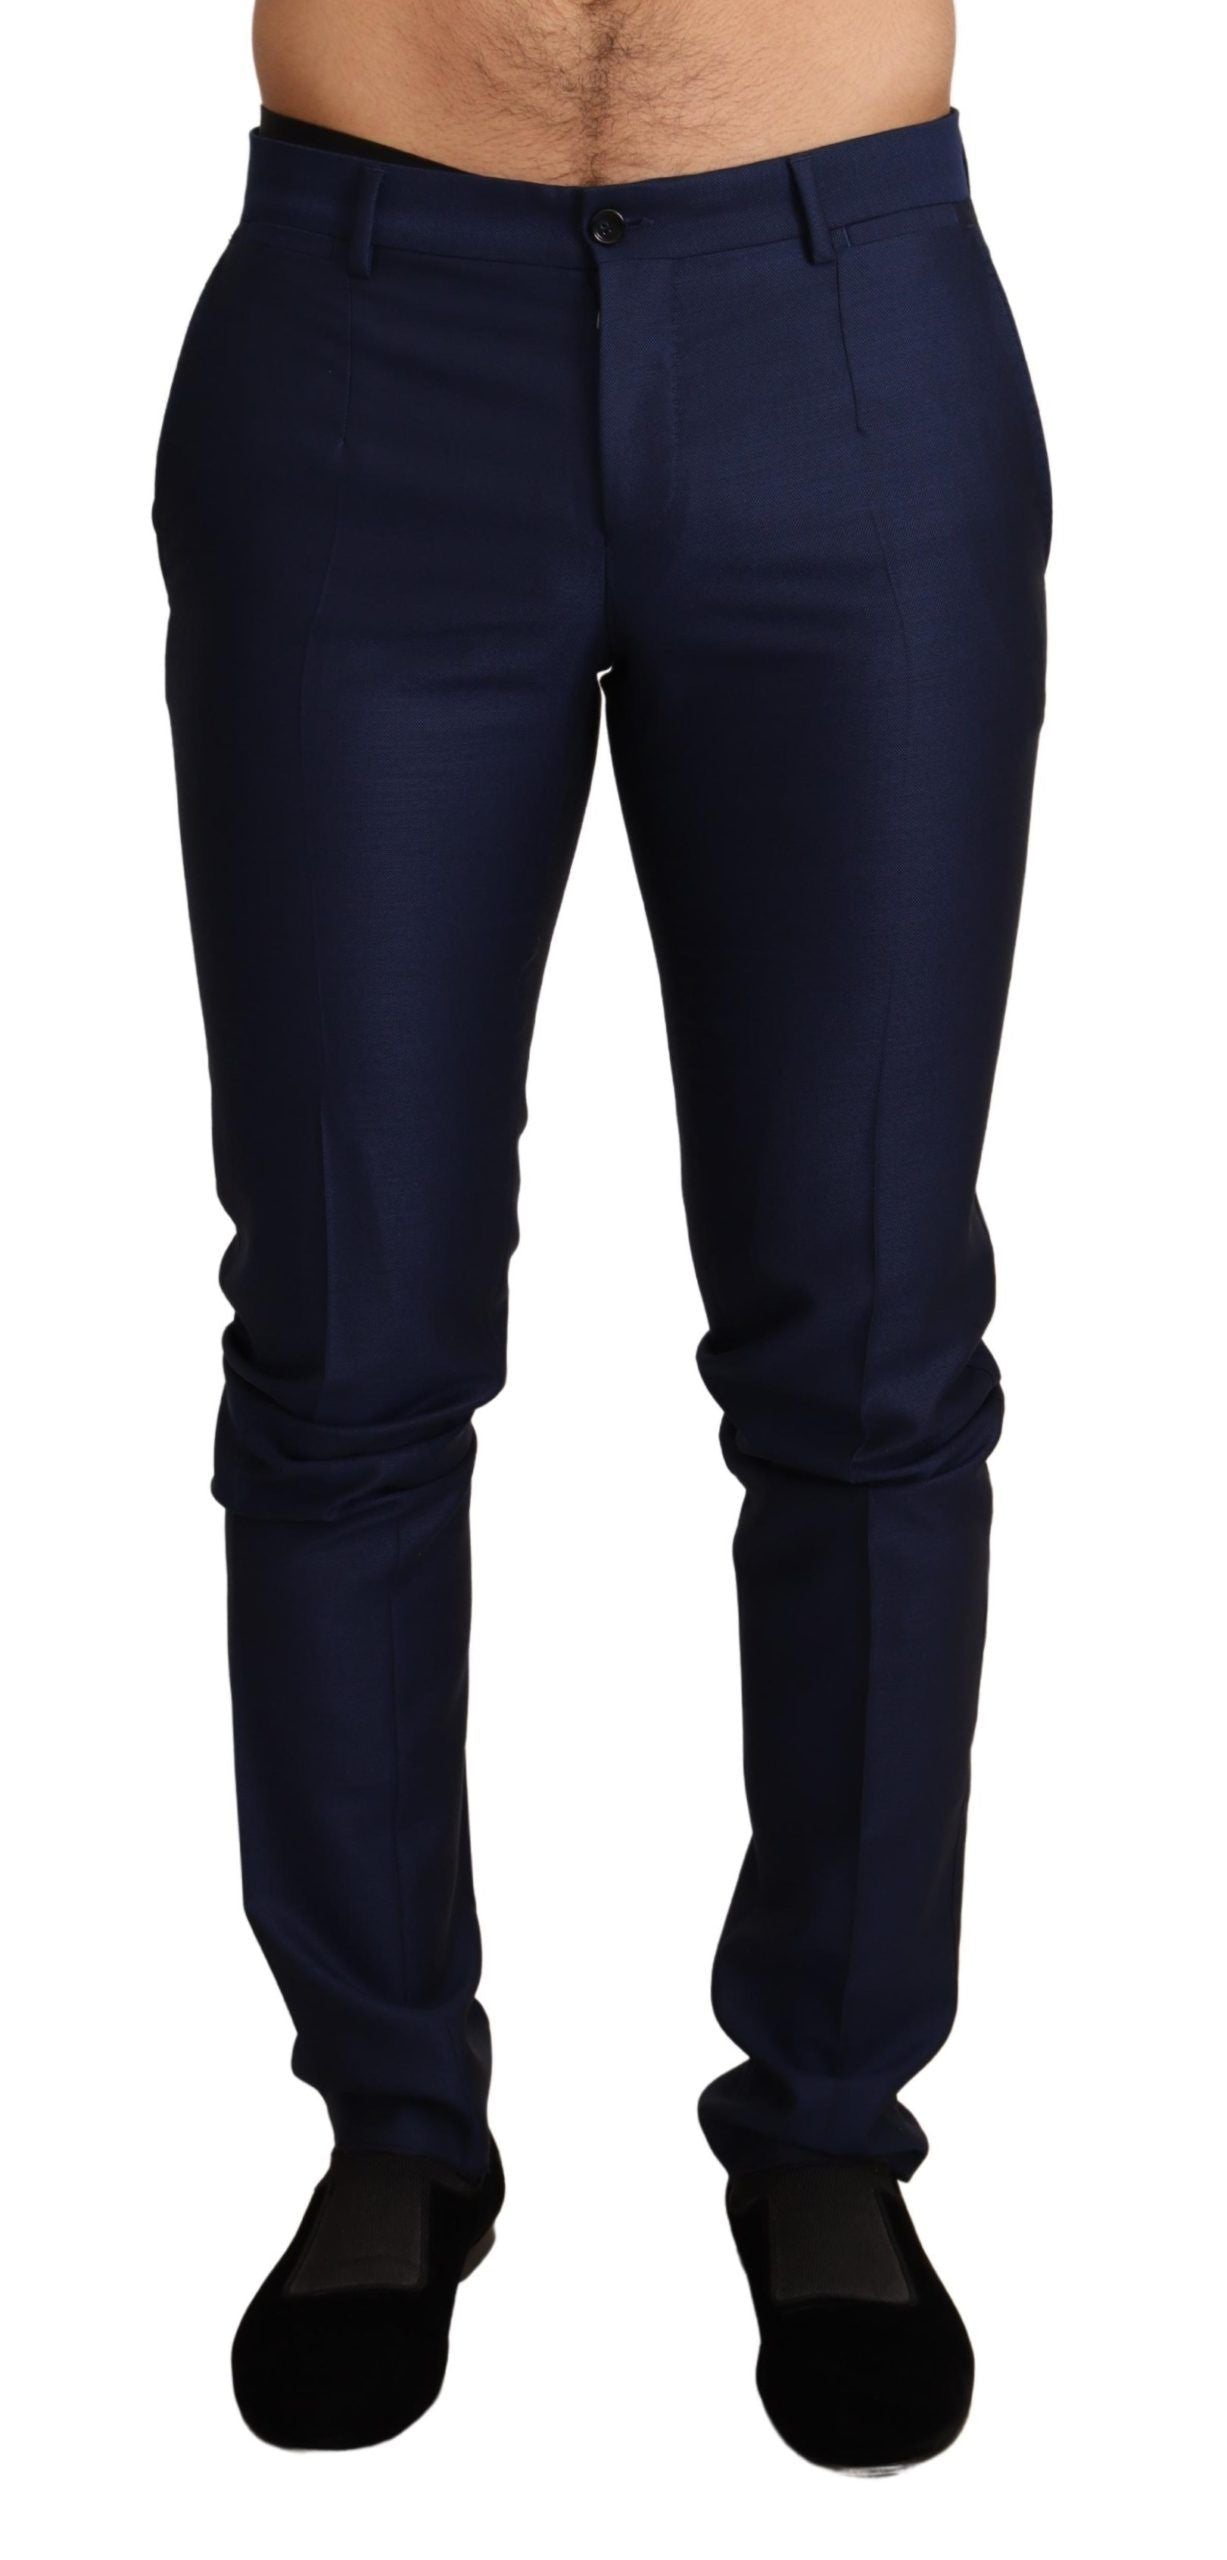 Dolce & Gabbana Navy Blue Wool Dress Formal Slim Trouser Pants